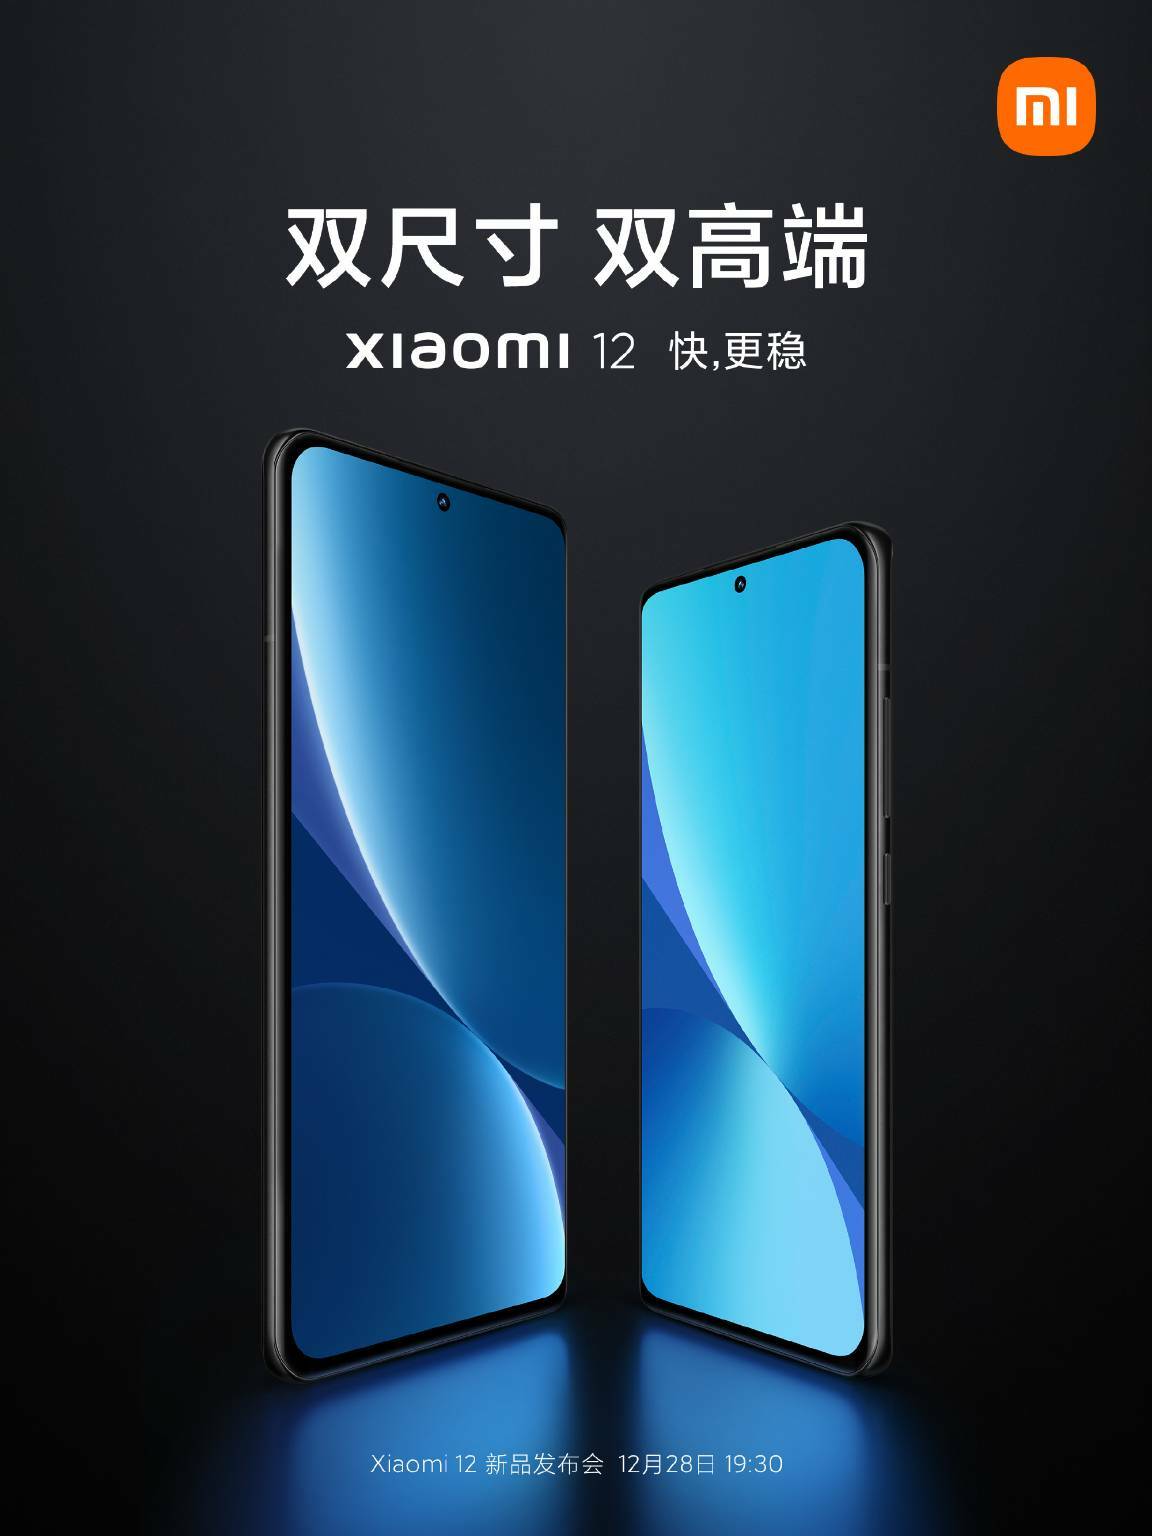 Xiaomi Poster 1 12